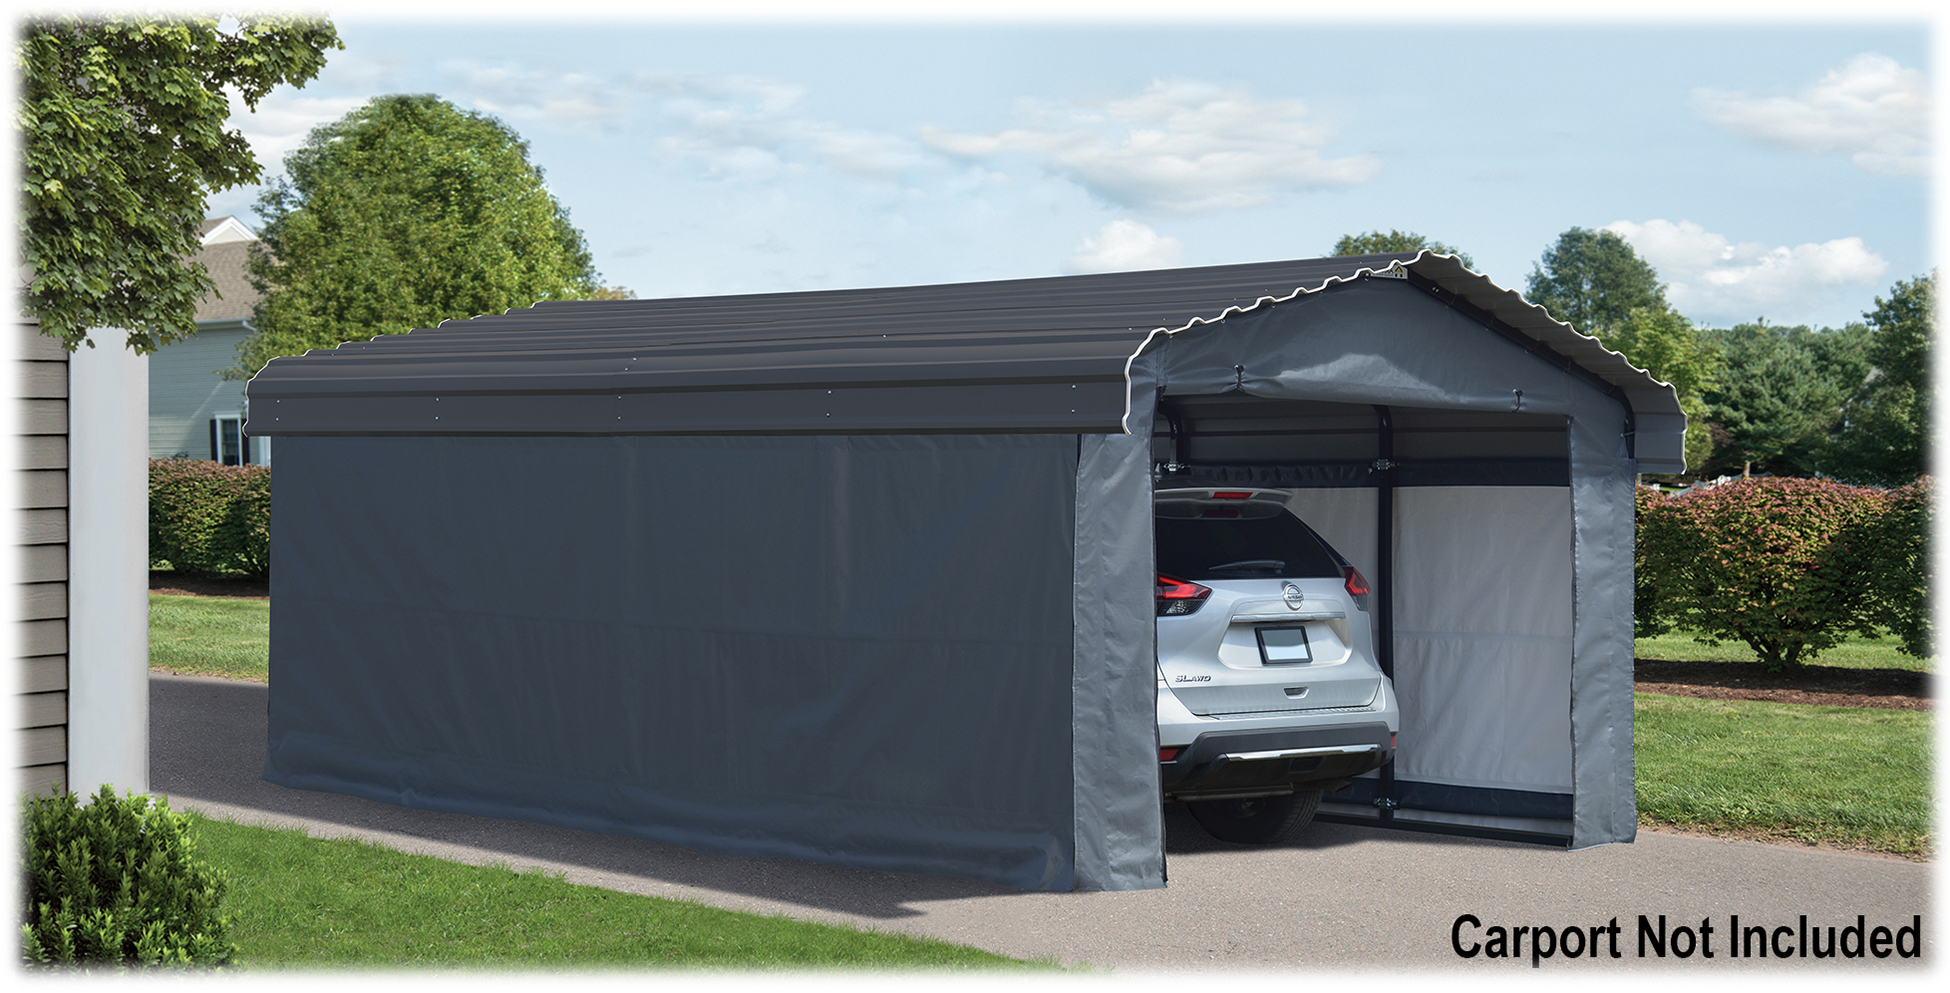 ShelterLogic Fabric Enclosure Kit for Arrow Carport - Gray - 12' x 20' x 8